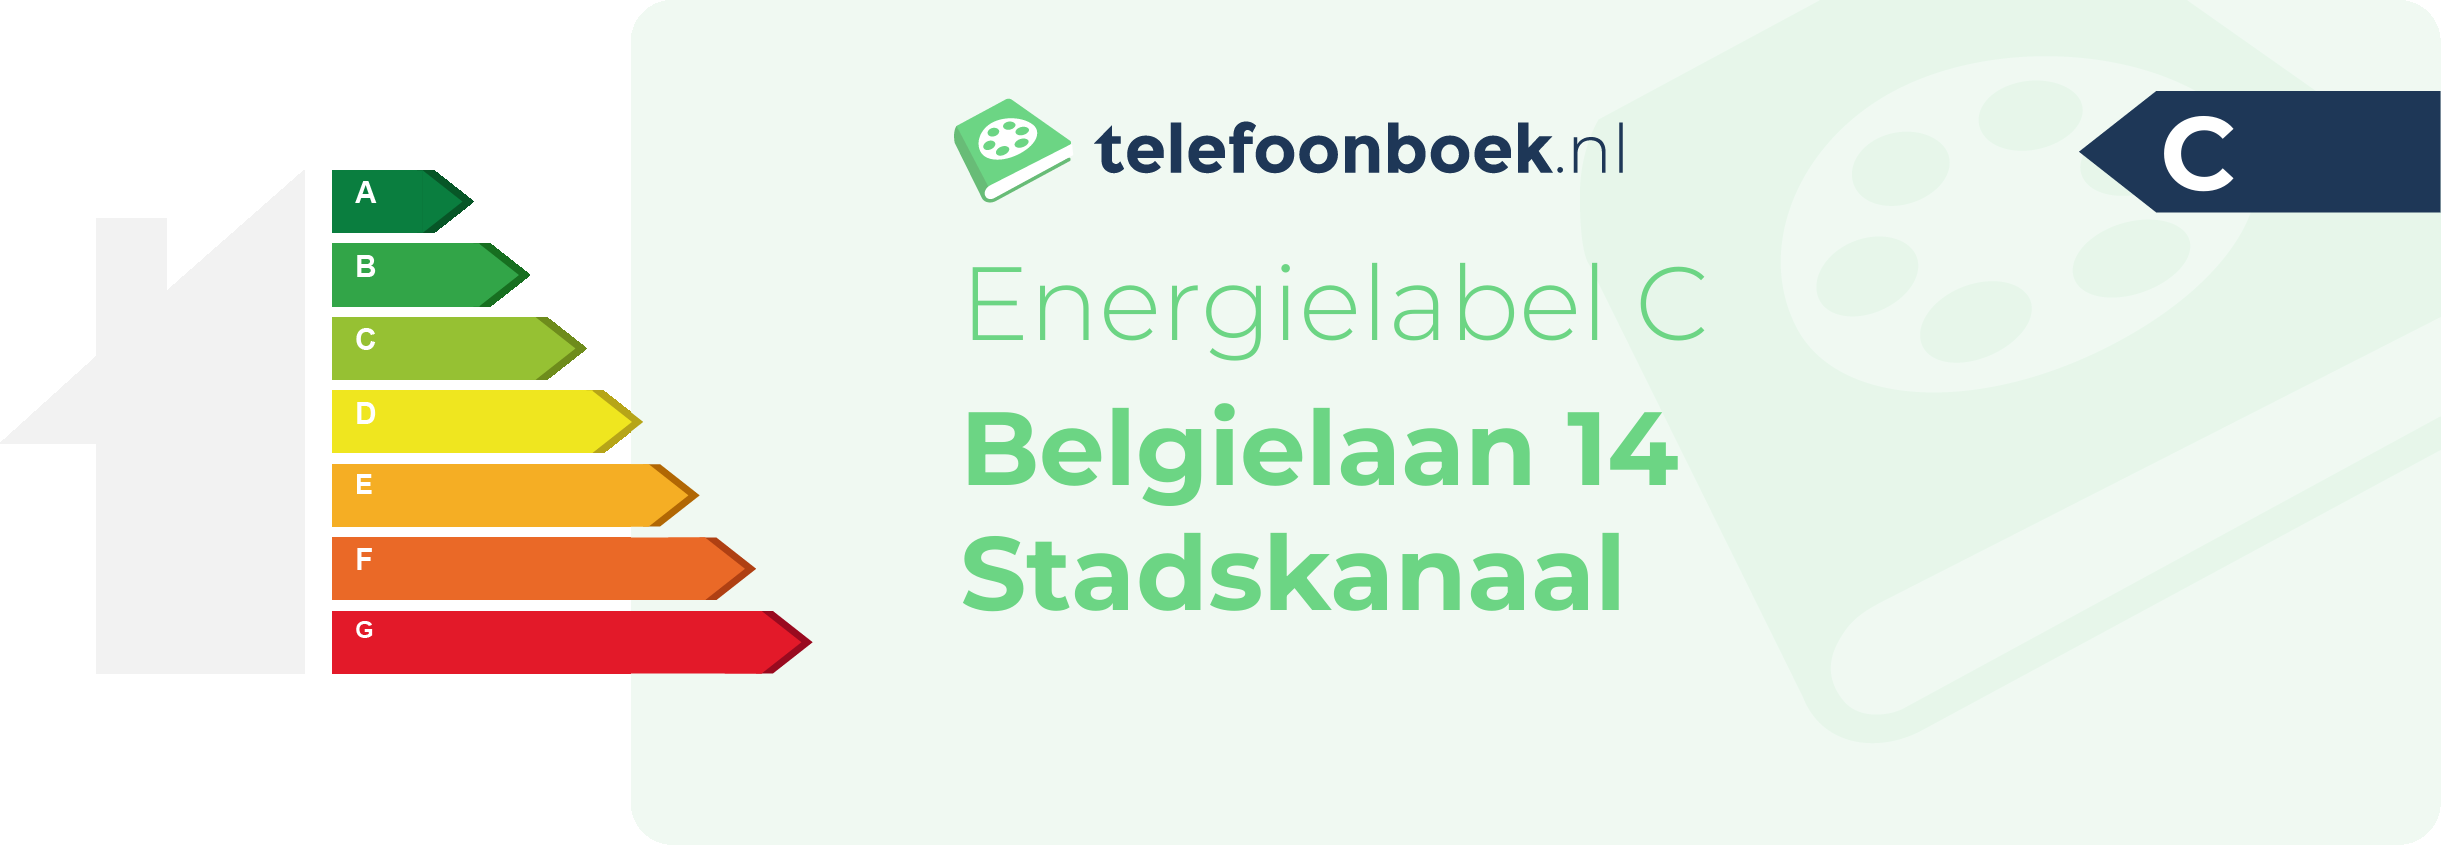 Energielabel Belgielaan 14 Stadskanaal